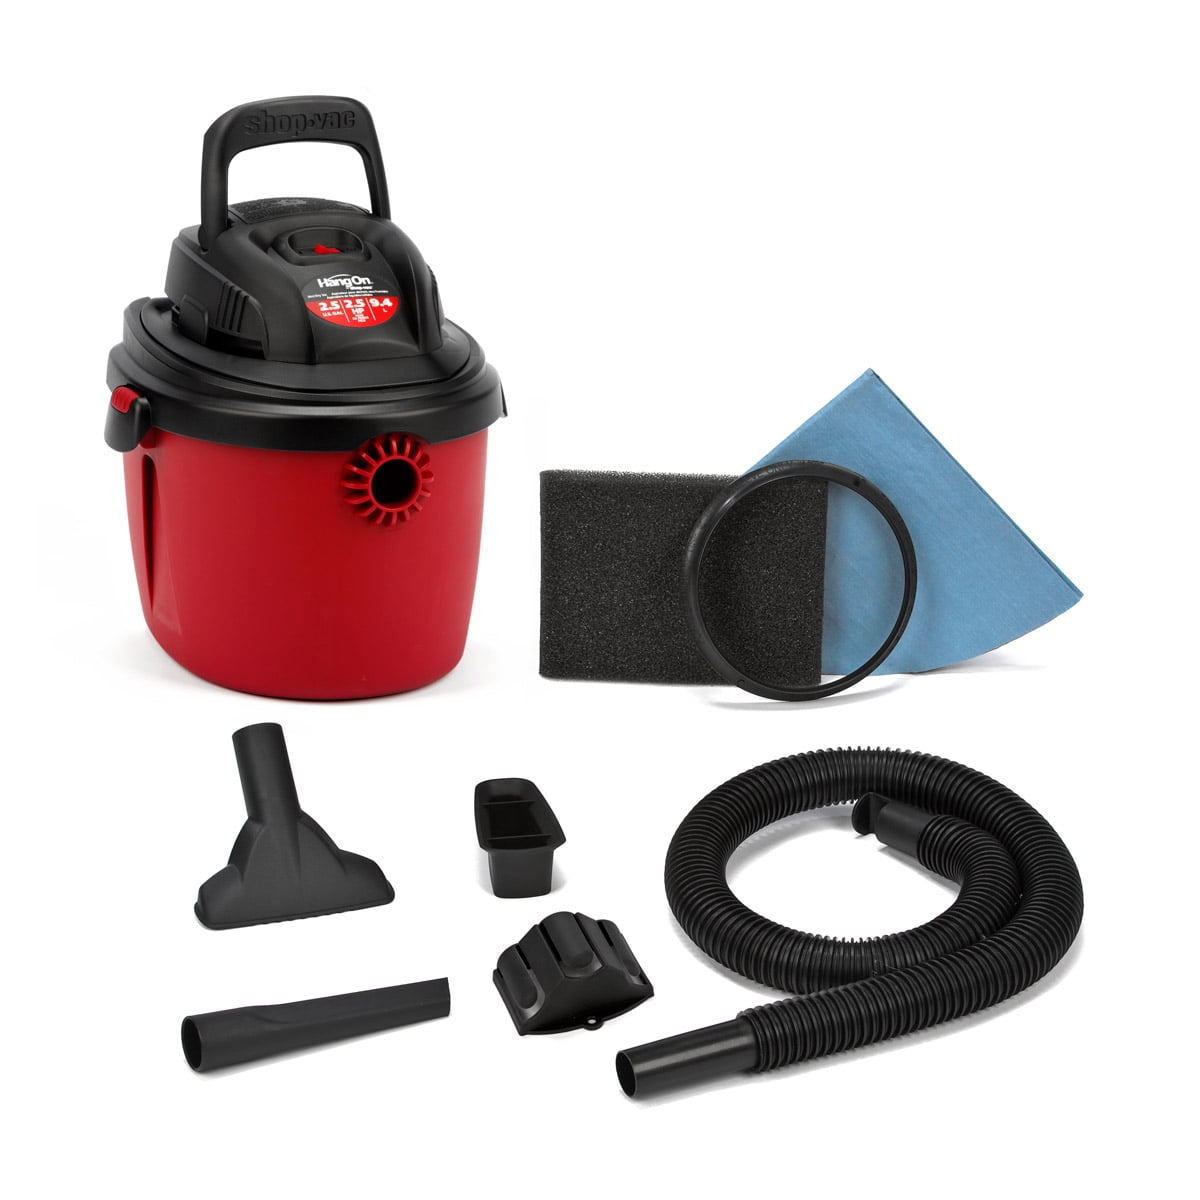 Red/Black NEW! Shop-Vac 2036000 2.5-Gallon 2.5 Peak HP Wet Dry Shopvac Vacuum 